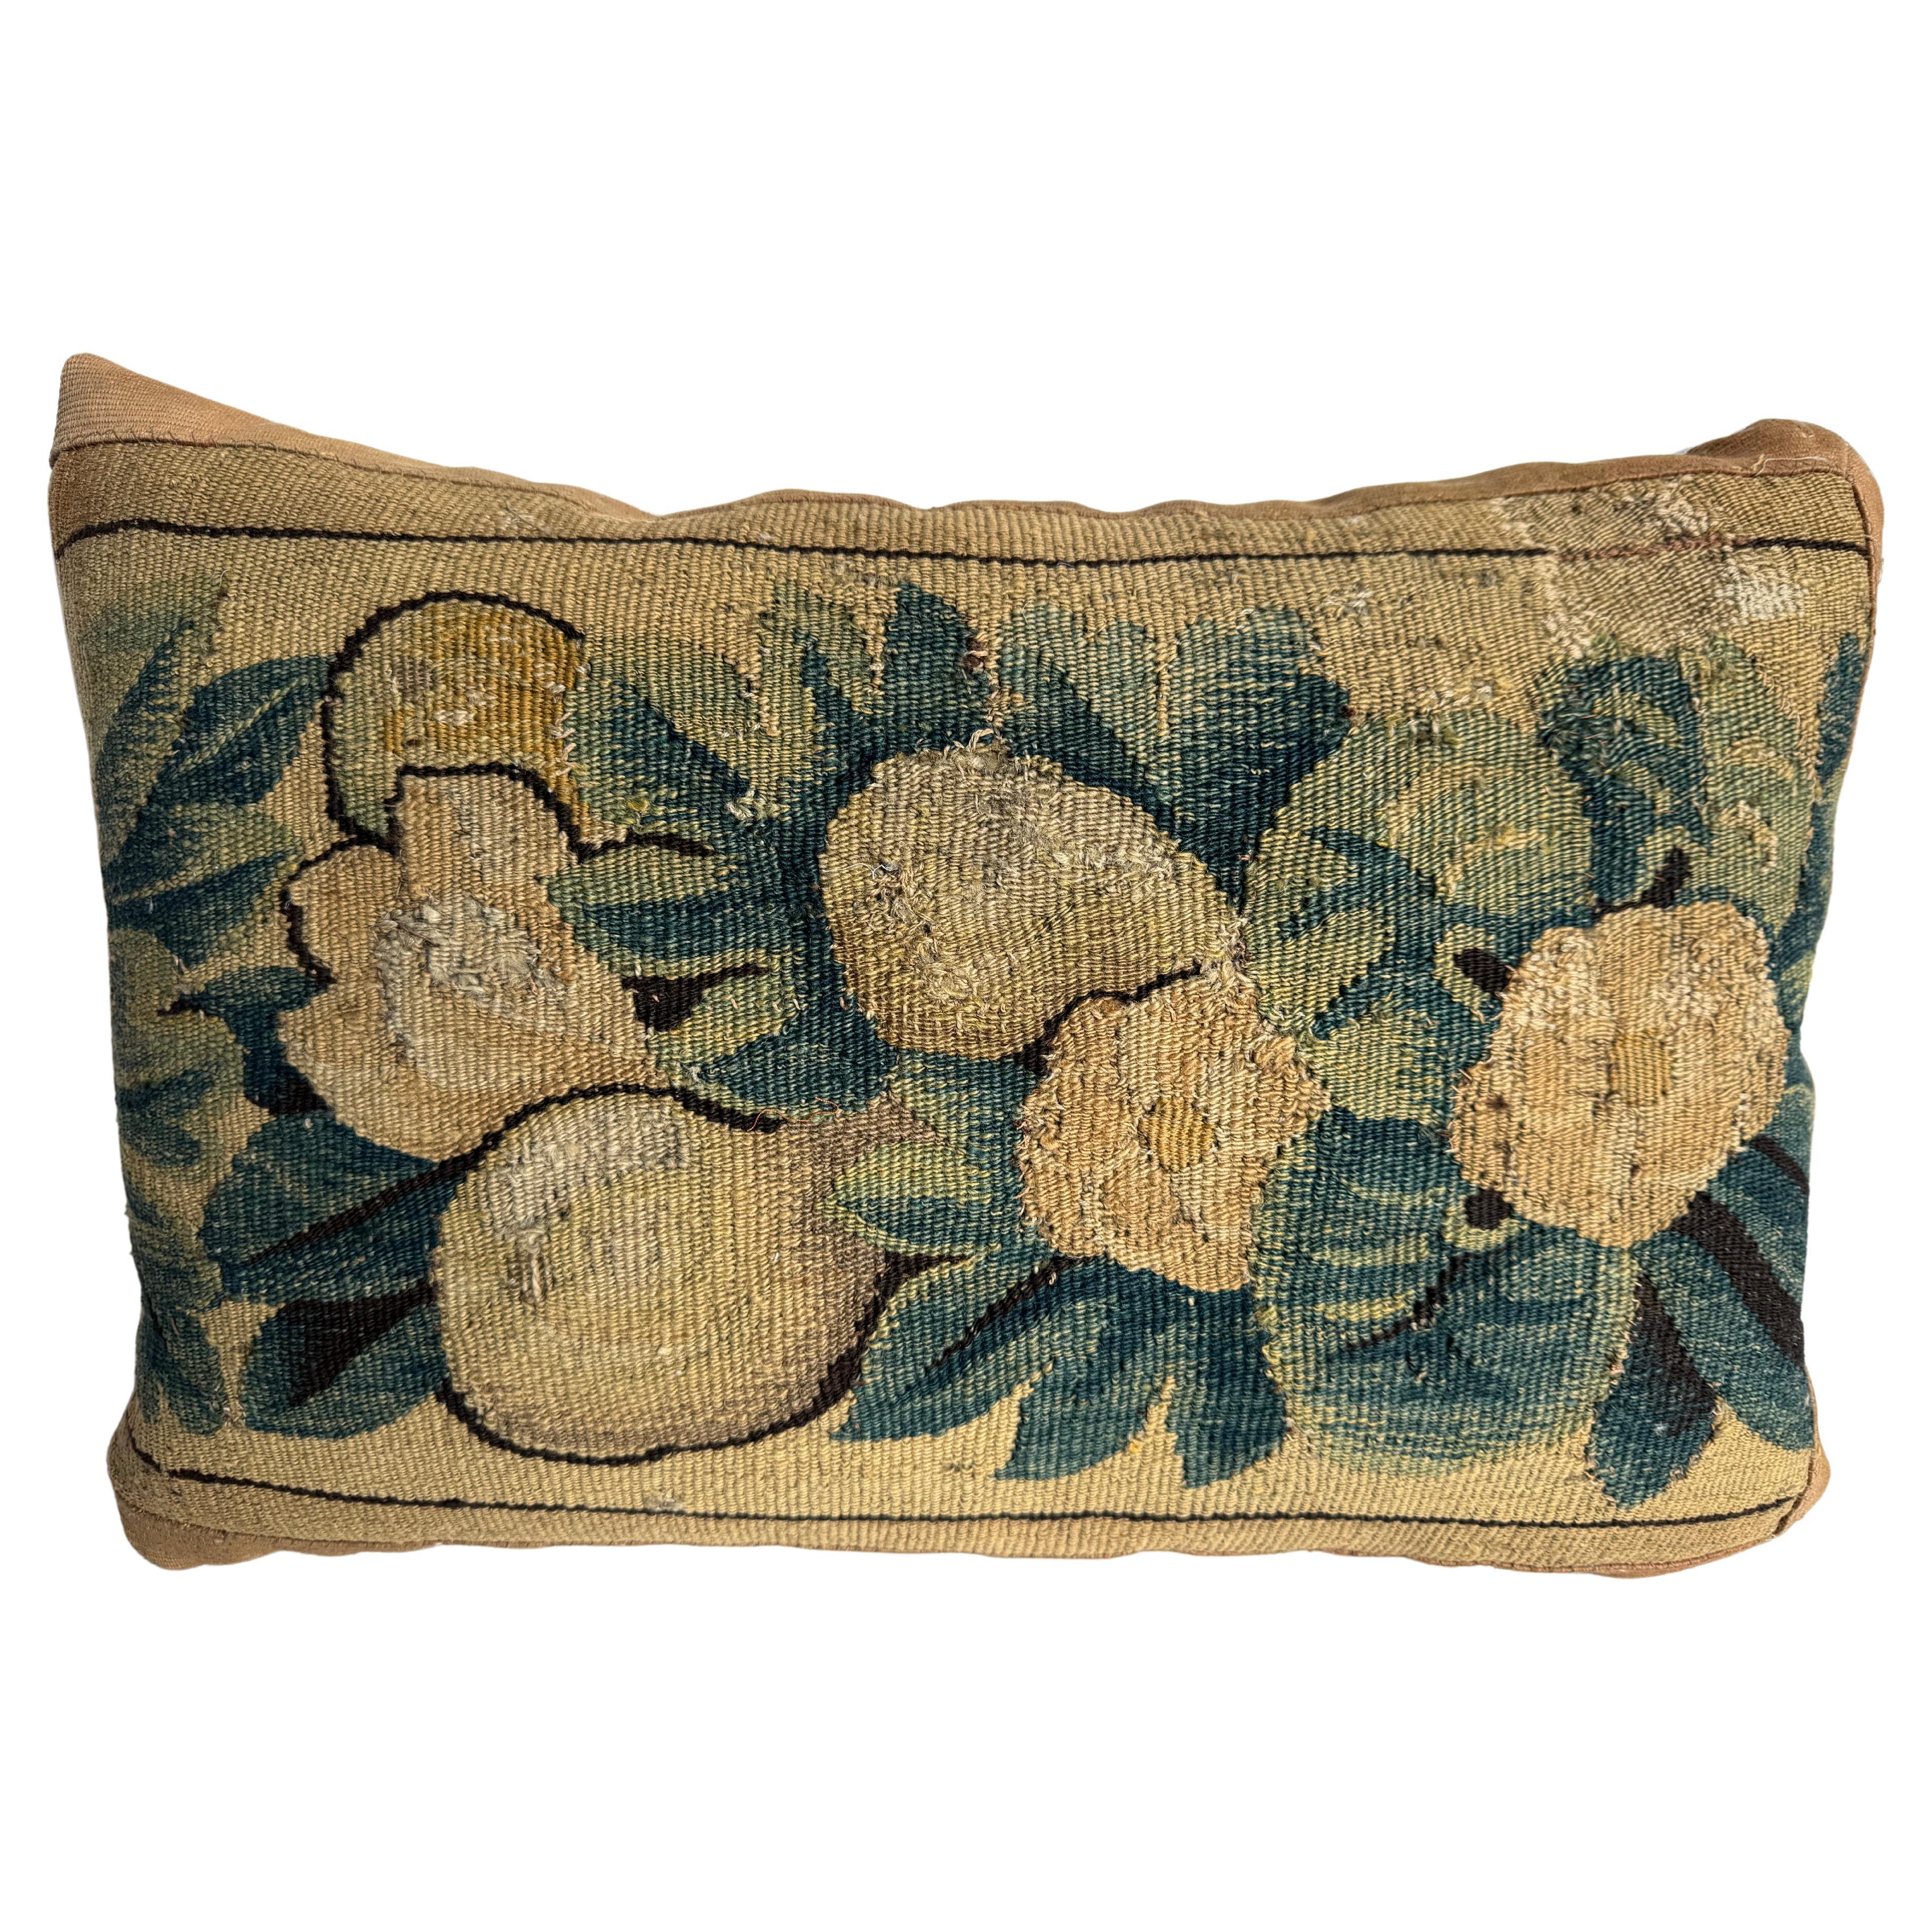 17th Century Flemish Pillow - 21" x 14" For Sale